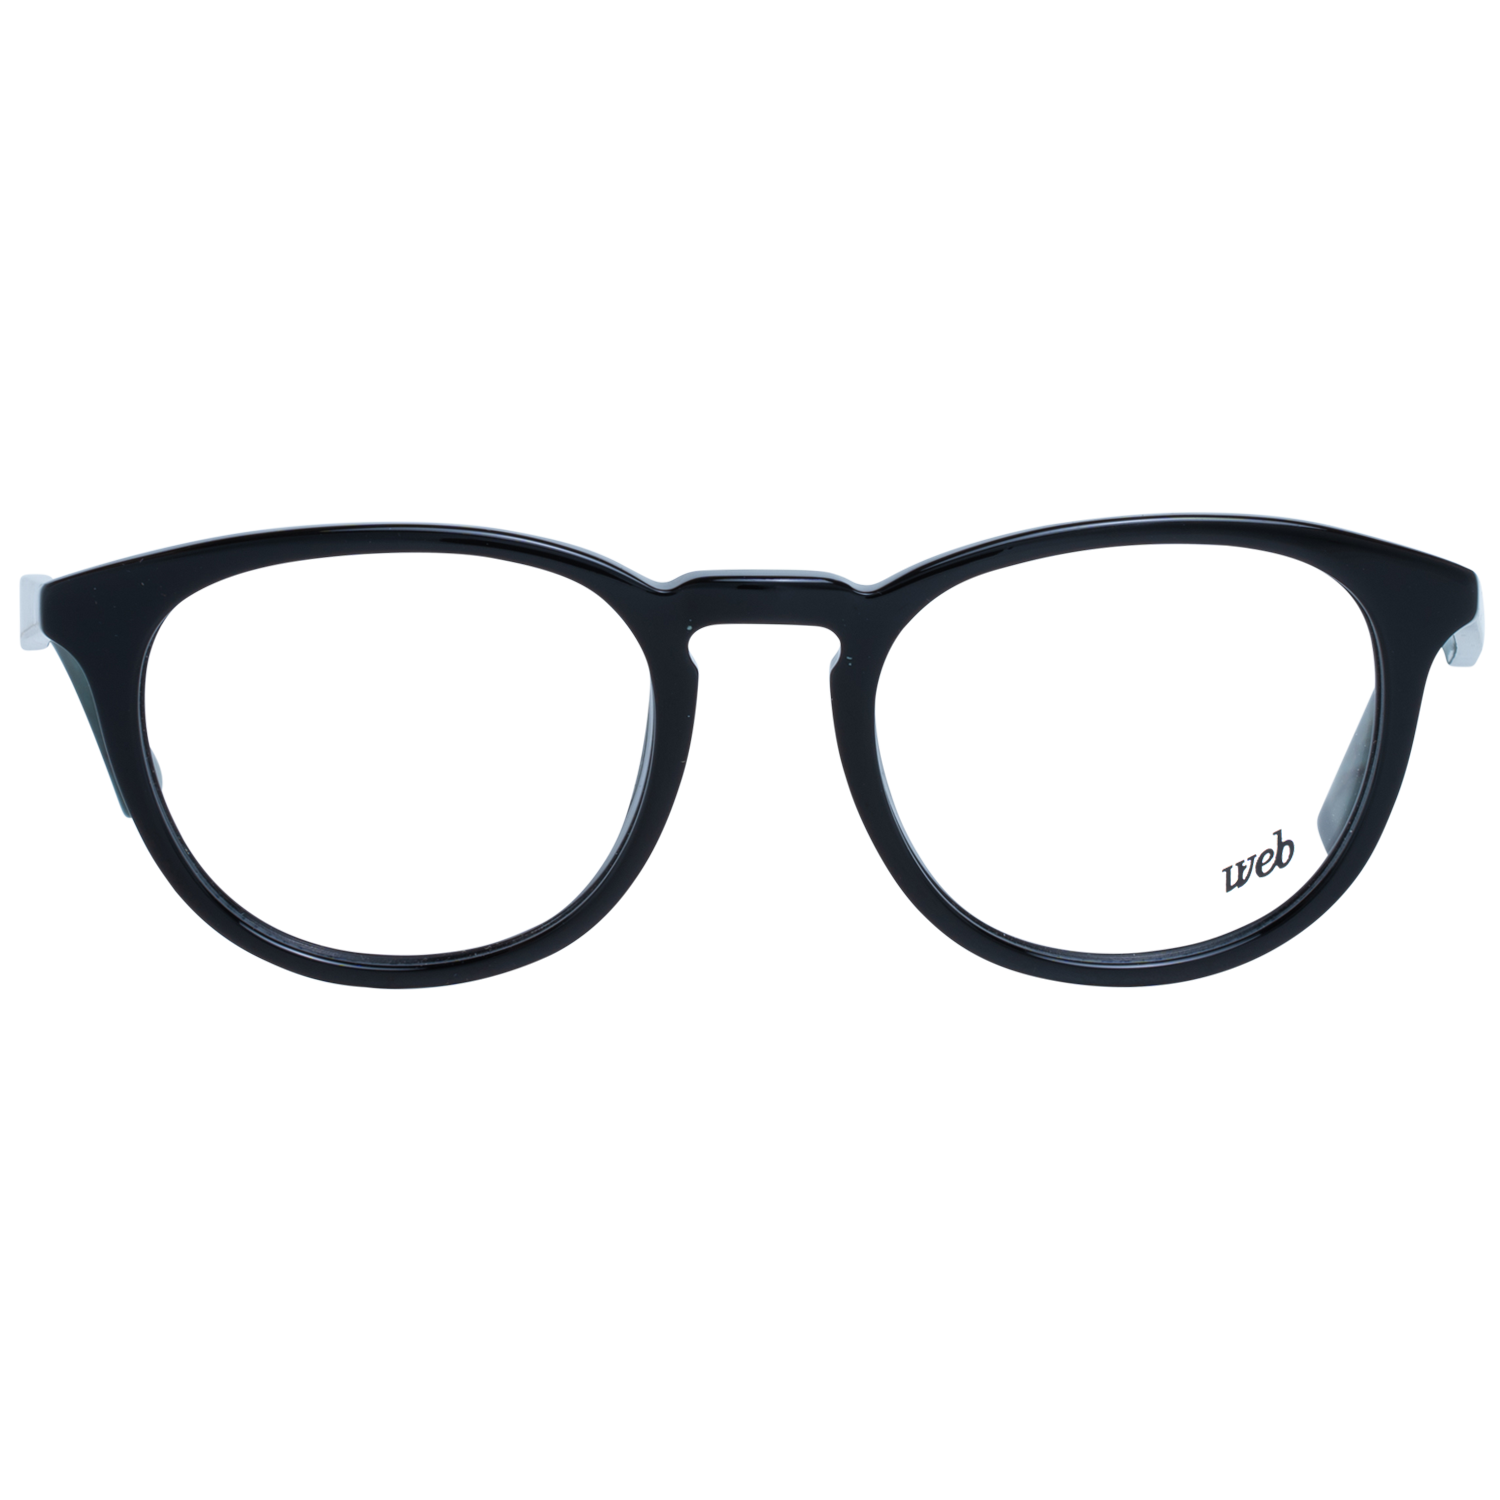 Web Frames Web Glasses Optical Frame WE5181-N A01 49 Eyeglasses Eyewear UK USA Australia 